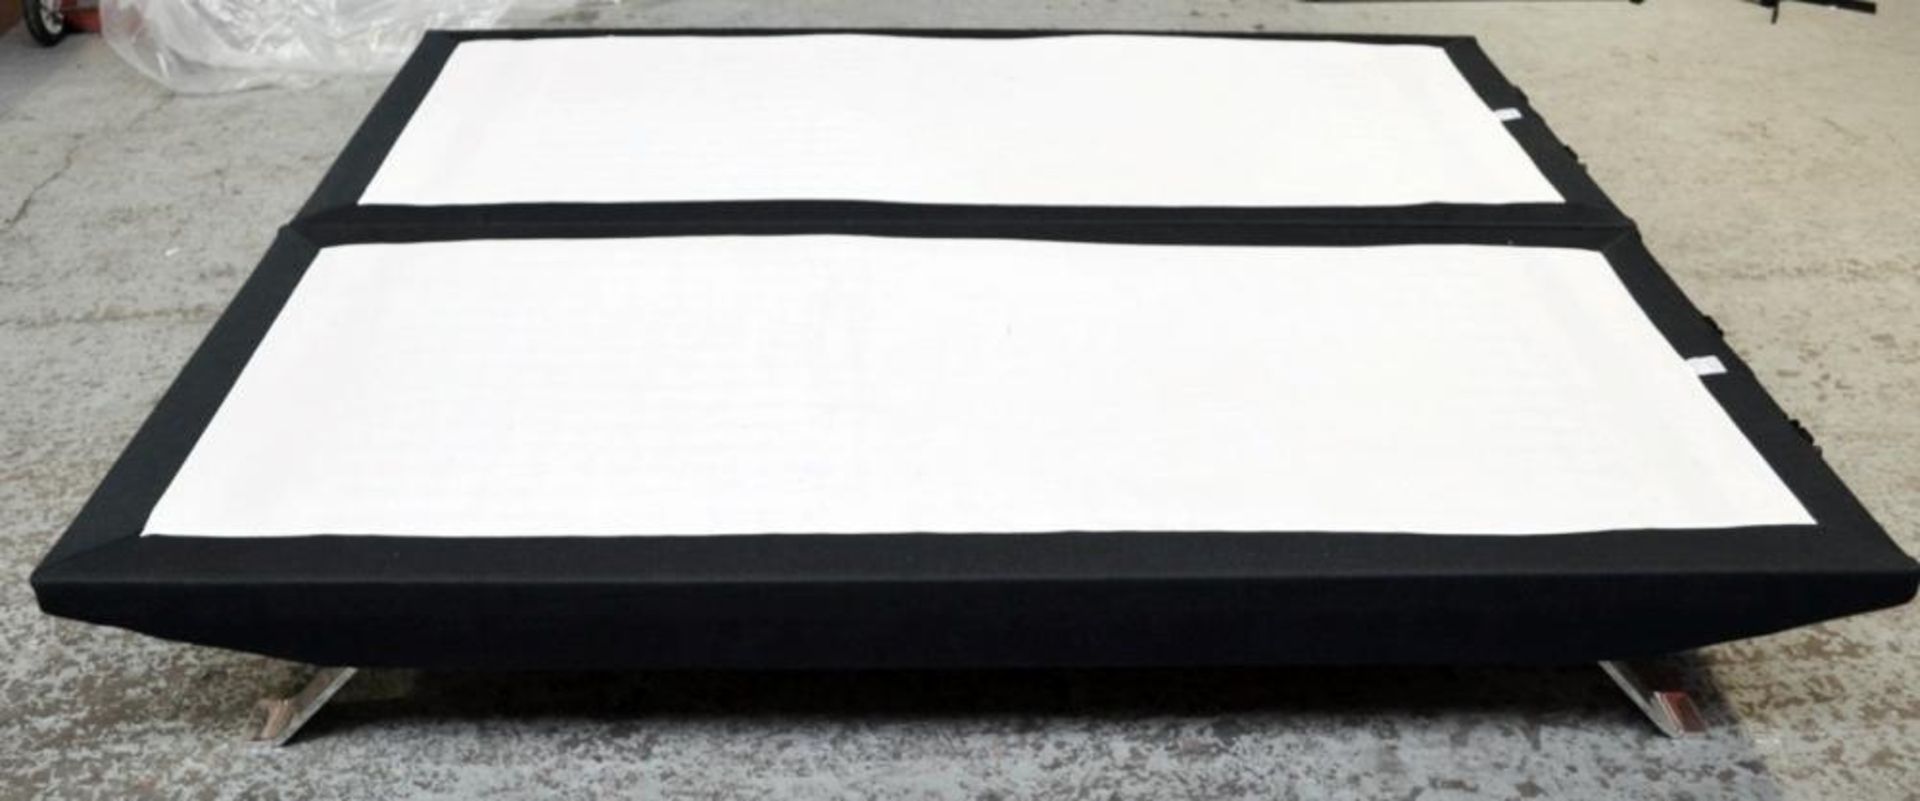 1 x Jensen EDEN Adjustable Superking Bed Base - W180 x L210 x H34cm - Colour: Black - CL087 - Ref: - Image 13 of 13